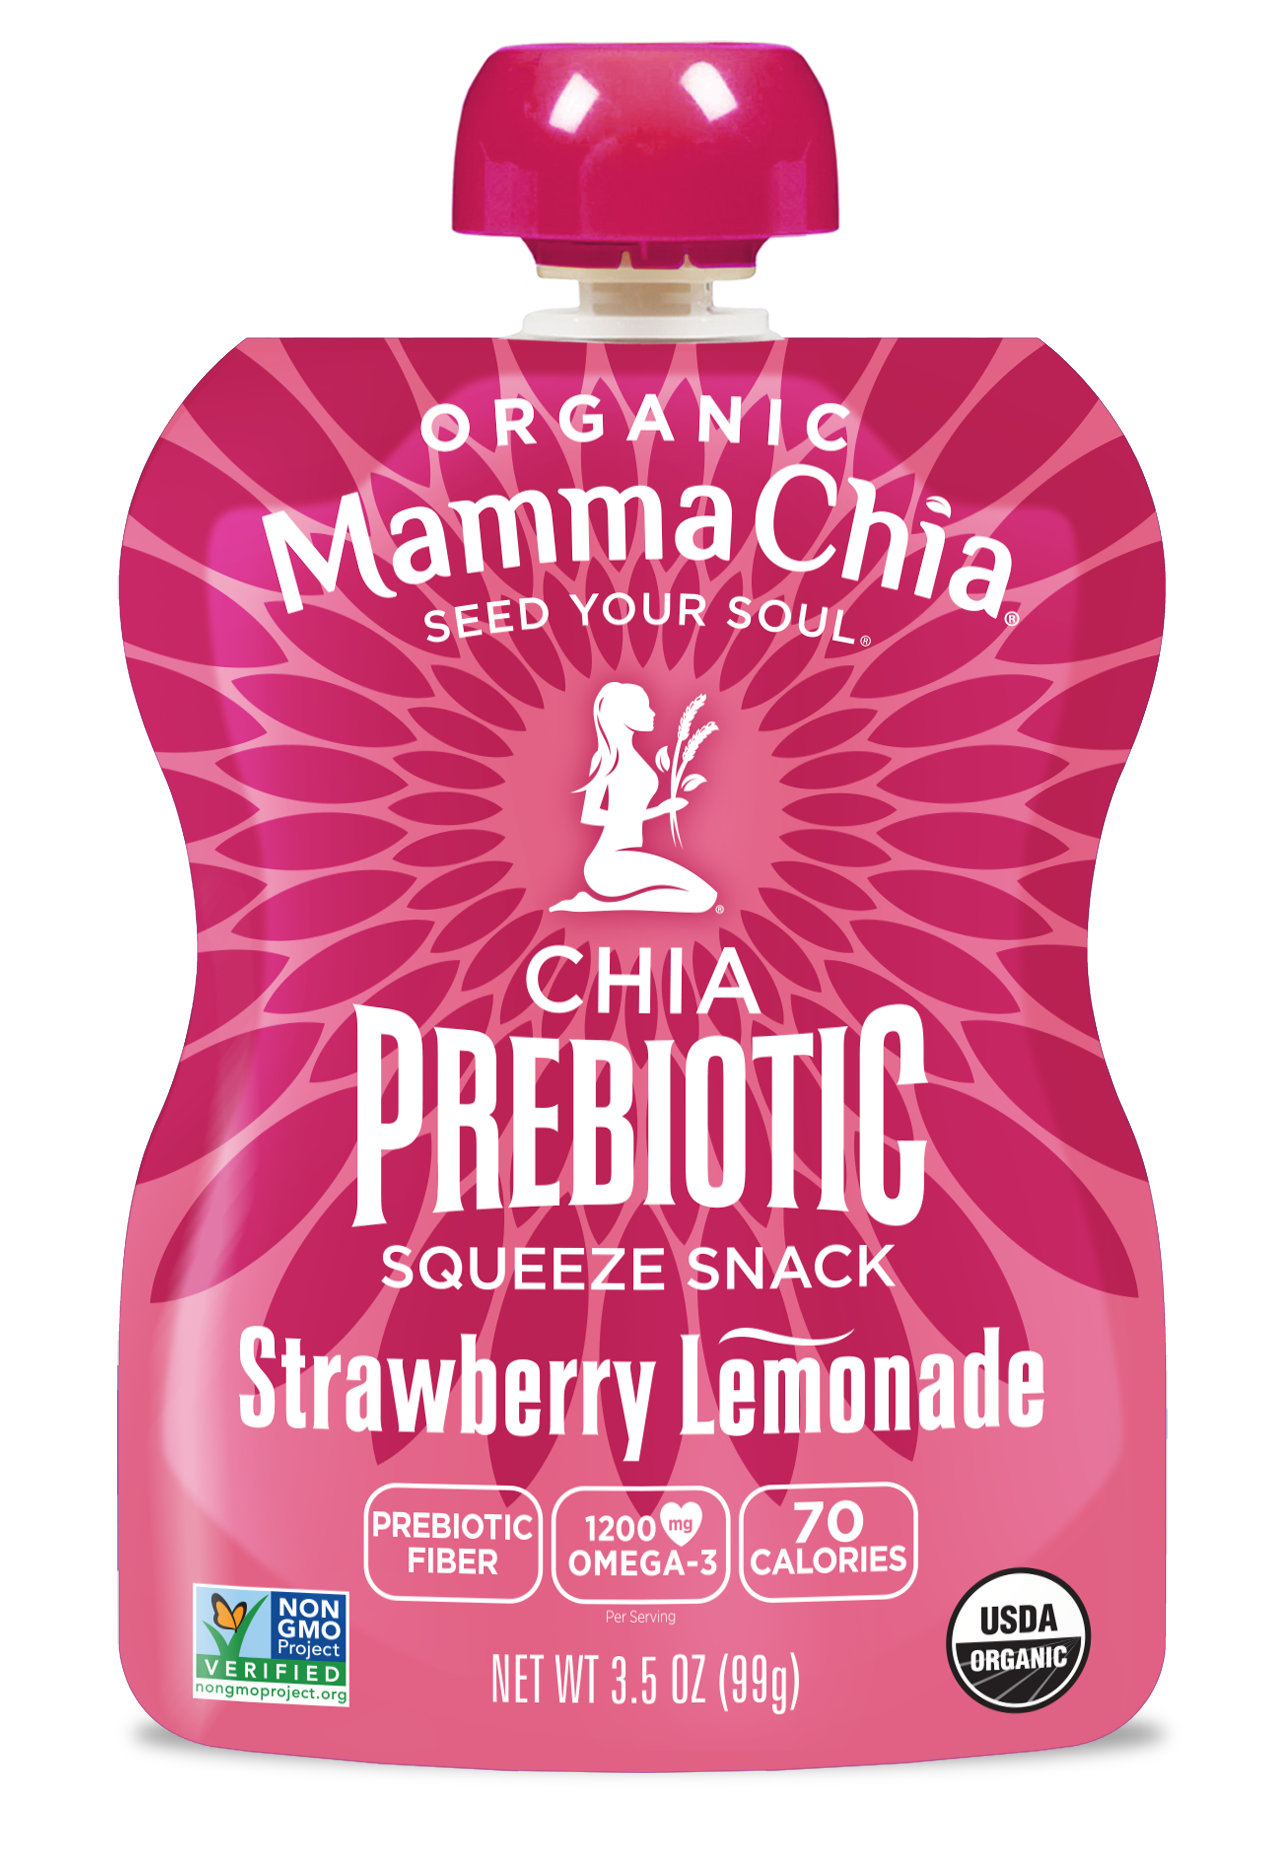 Mamma Chia Strawberry Lemonade Organic Chia Prebiotic Squeeze 6 innerpacks per case 14.0 oz